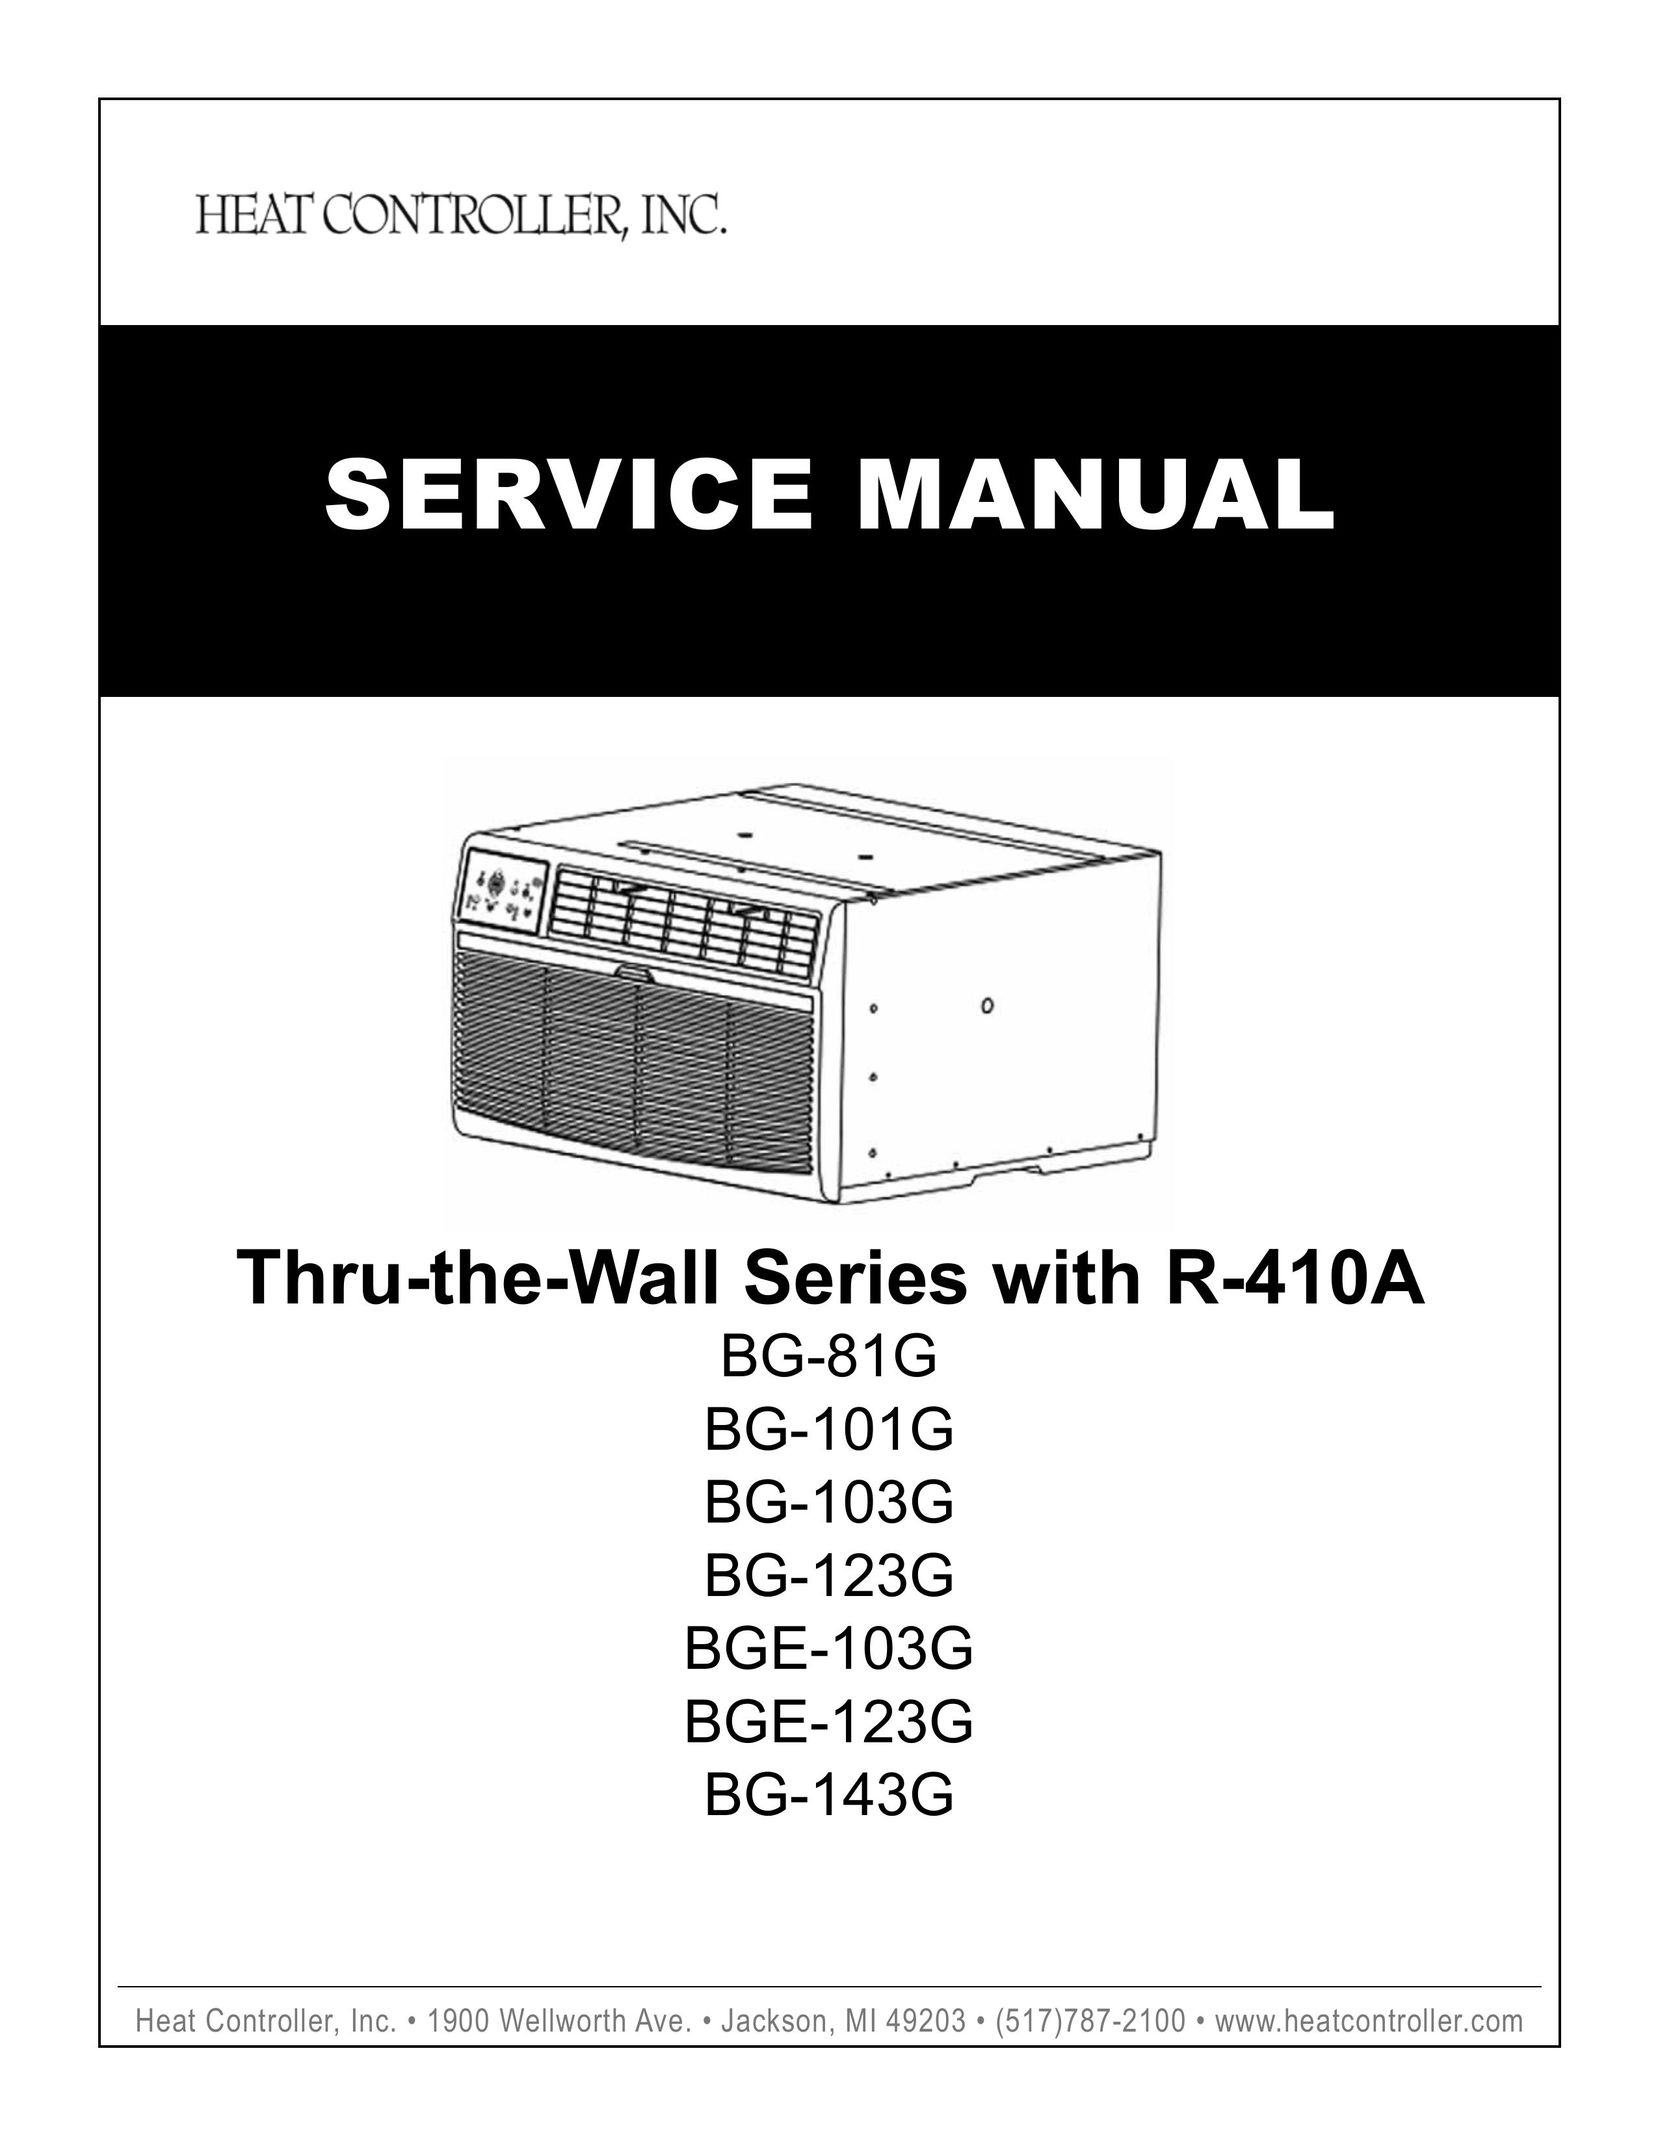 Heat Controller BG-123G Air Conditioner User Manual